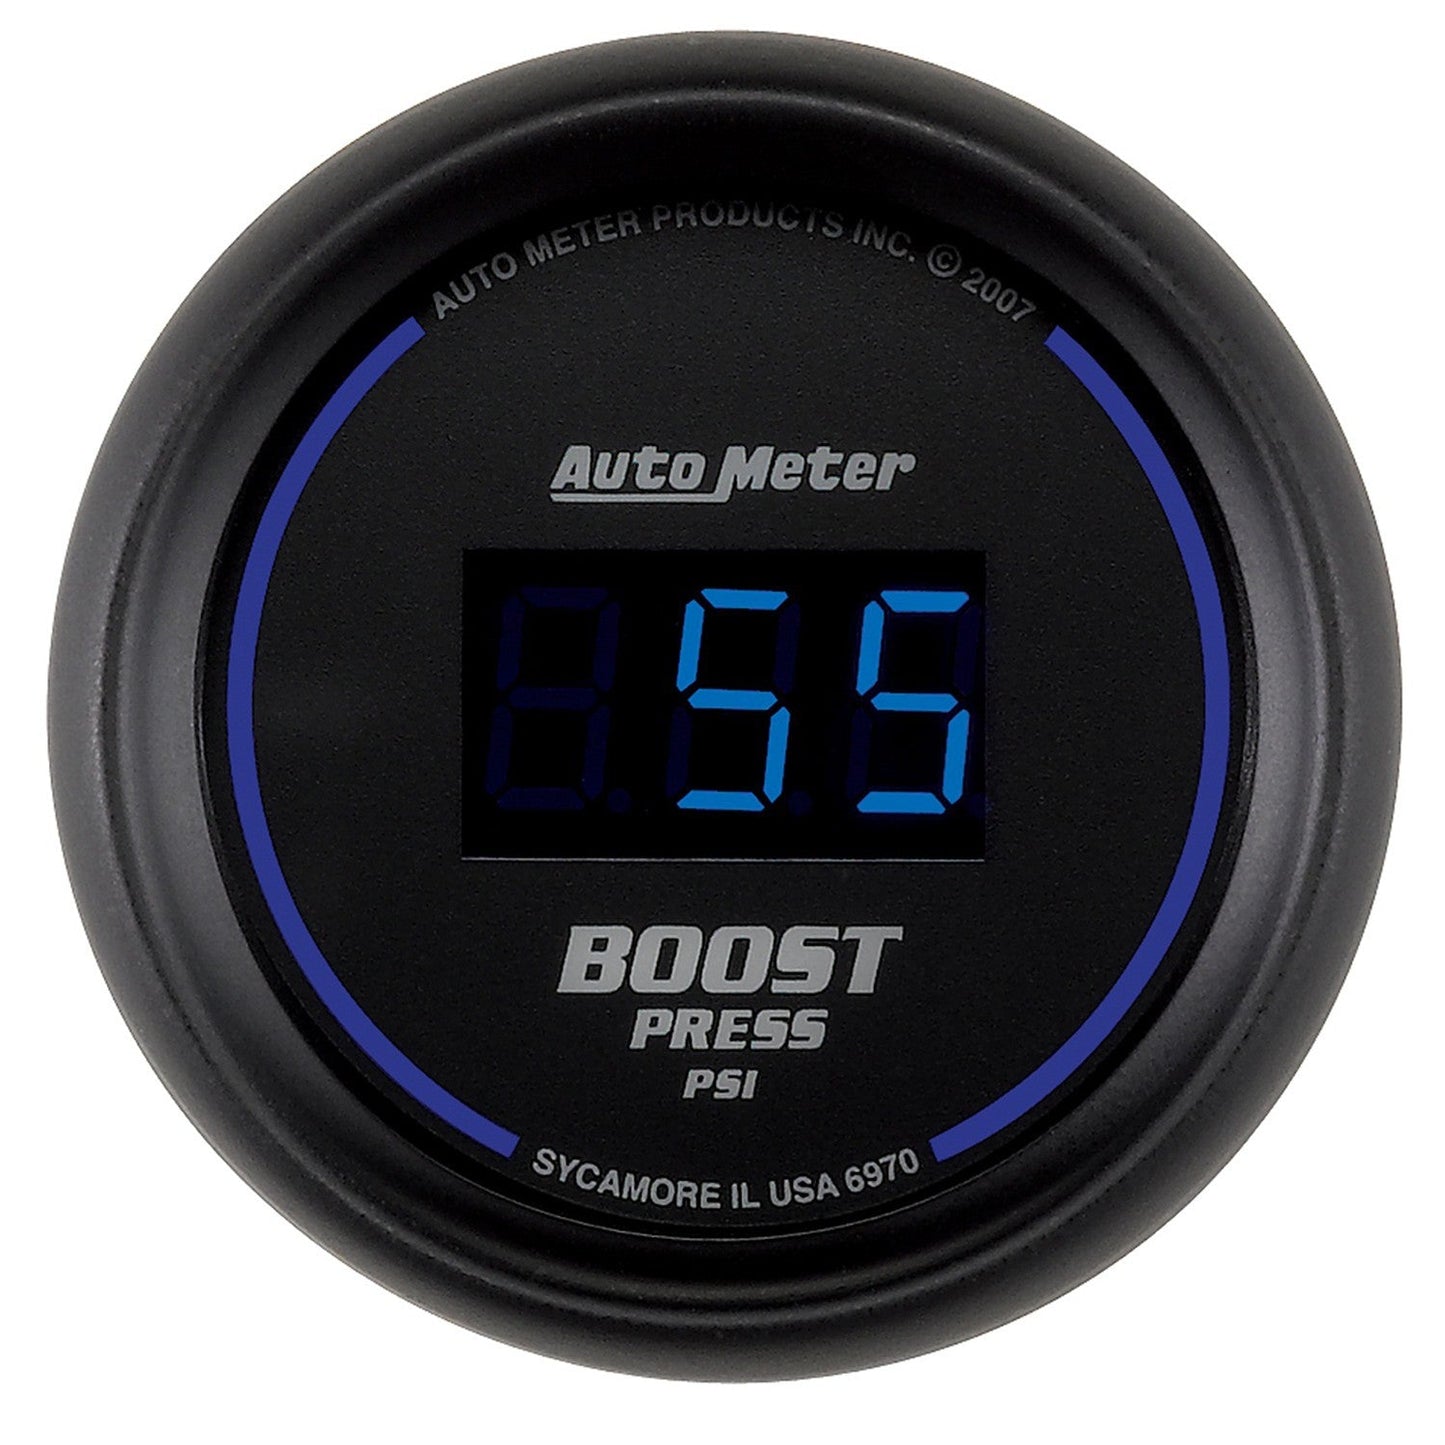 AutoMeter - 2-1/16" BOOST, 5-60 PSI, COBALTO DIGITAL (6970)